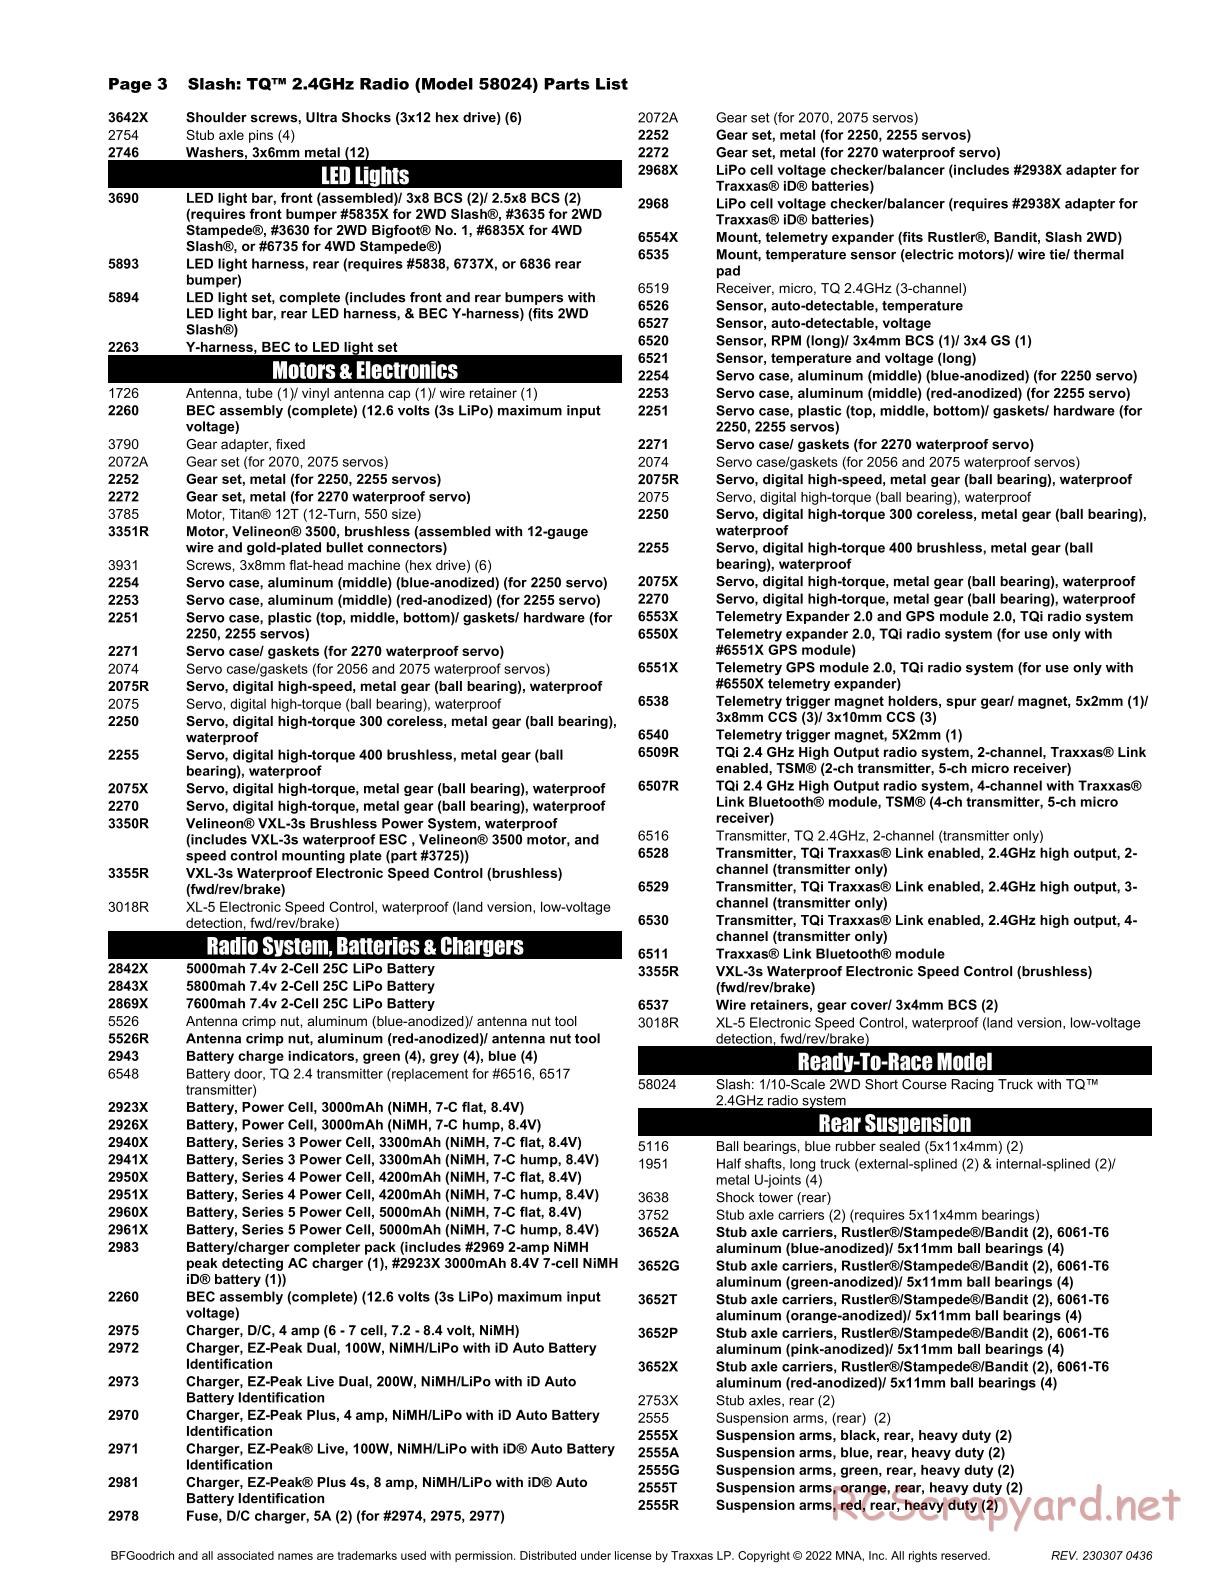 Traxxas - Slash 2WD (2012) - Parts List - Page 3